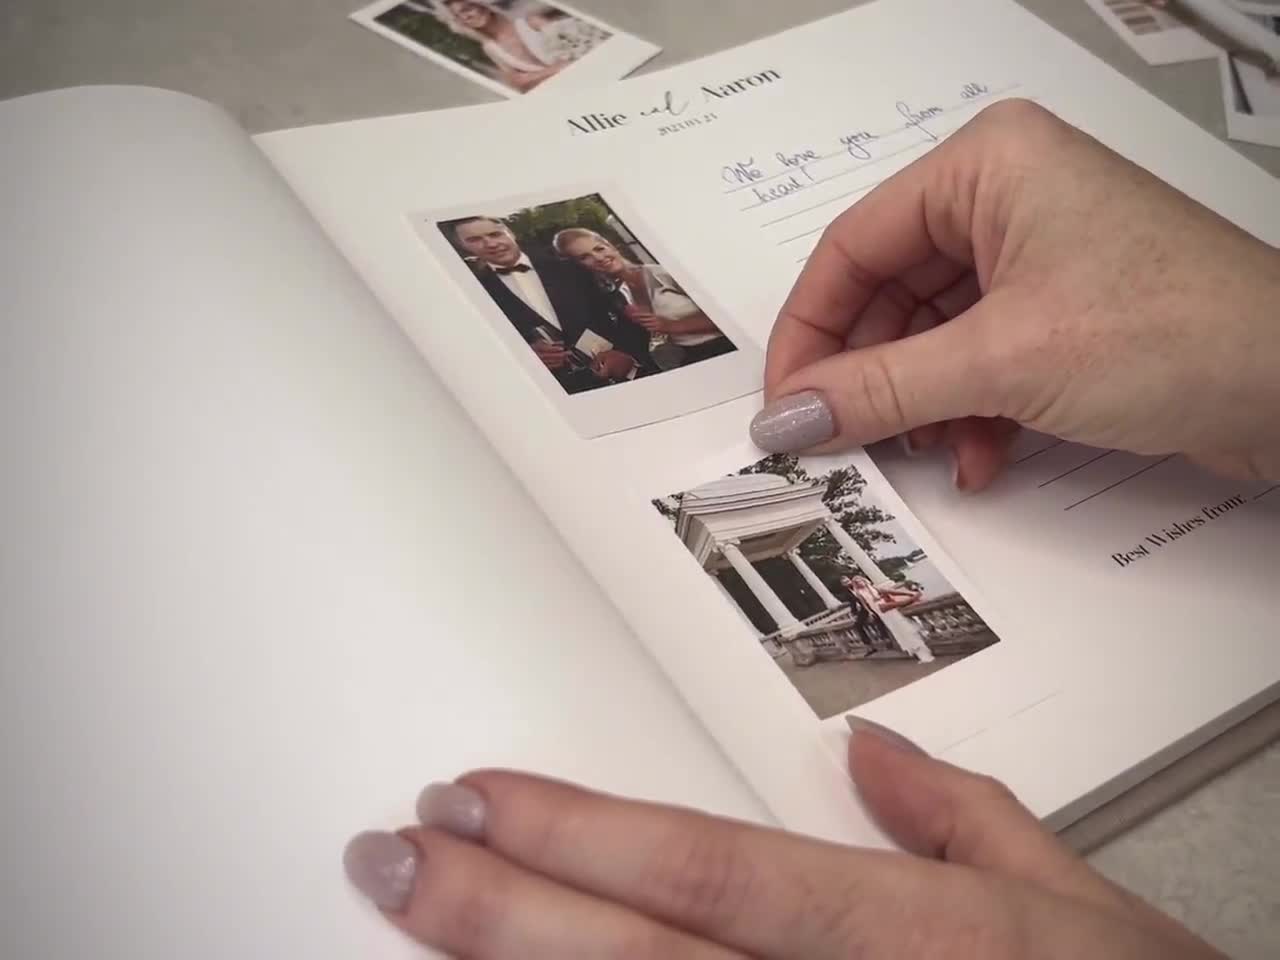 Personalised Modern Travel Photo Album With Self-adhesive Pages, Scrapbook  Photo Album, Large Wedding Album, Family Photo Album 